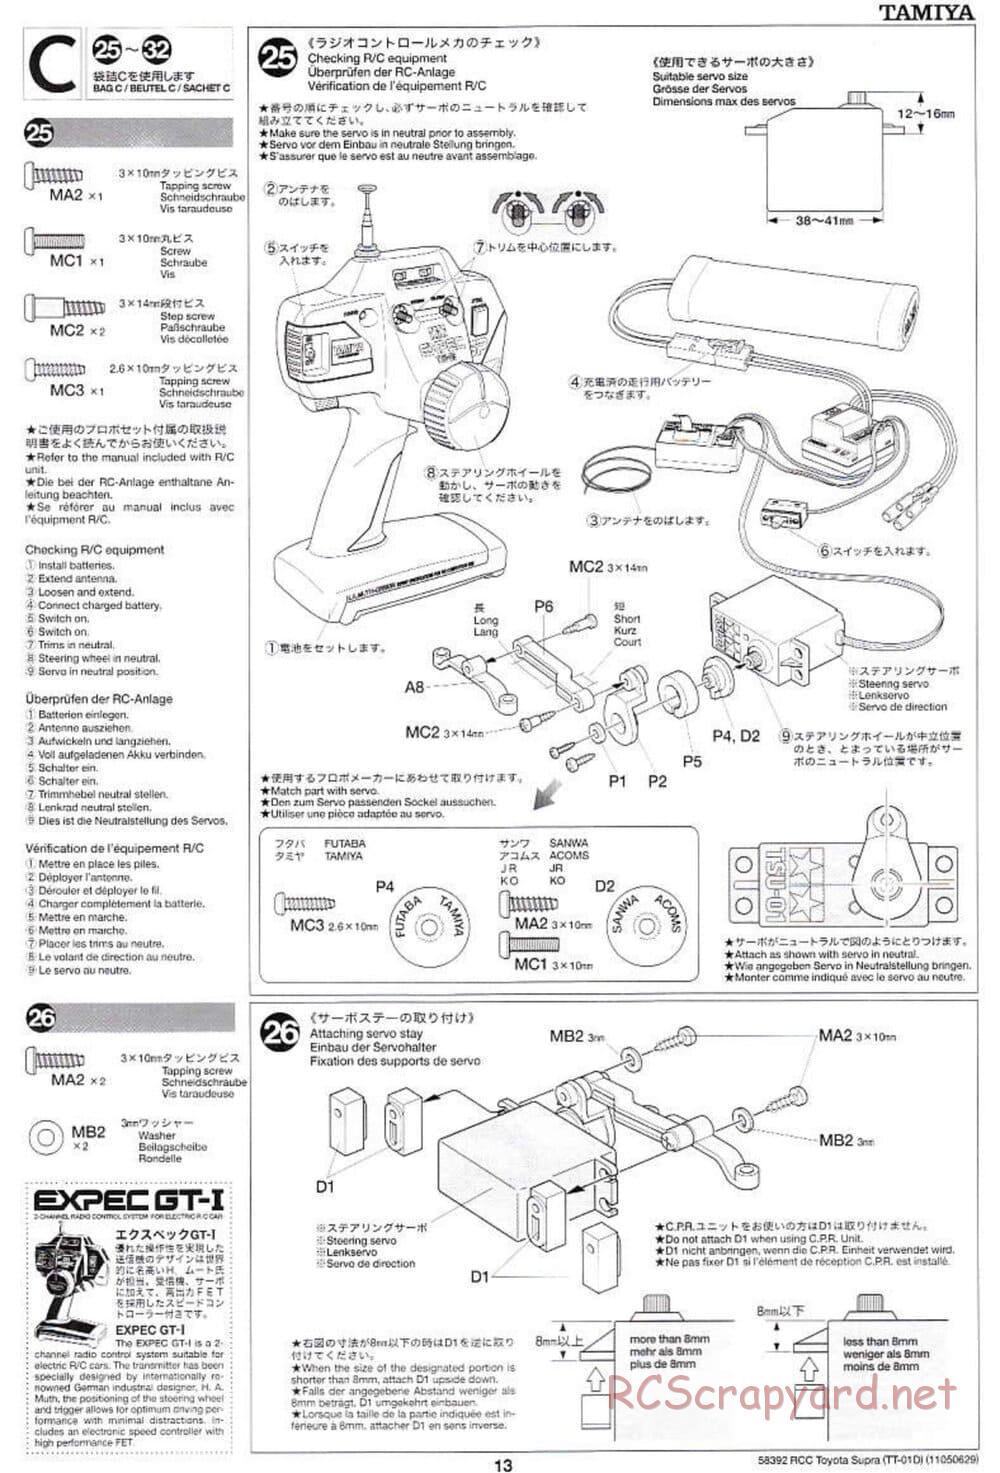 Tamiya - Toyota Supra - Drift Spec - TT-01D Chassis - Manual - Page 13